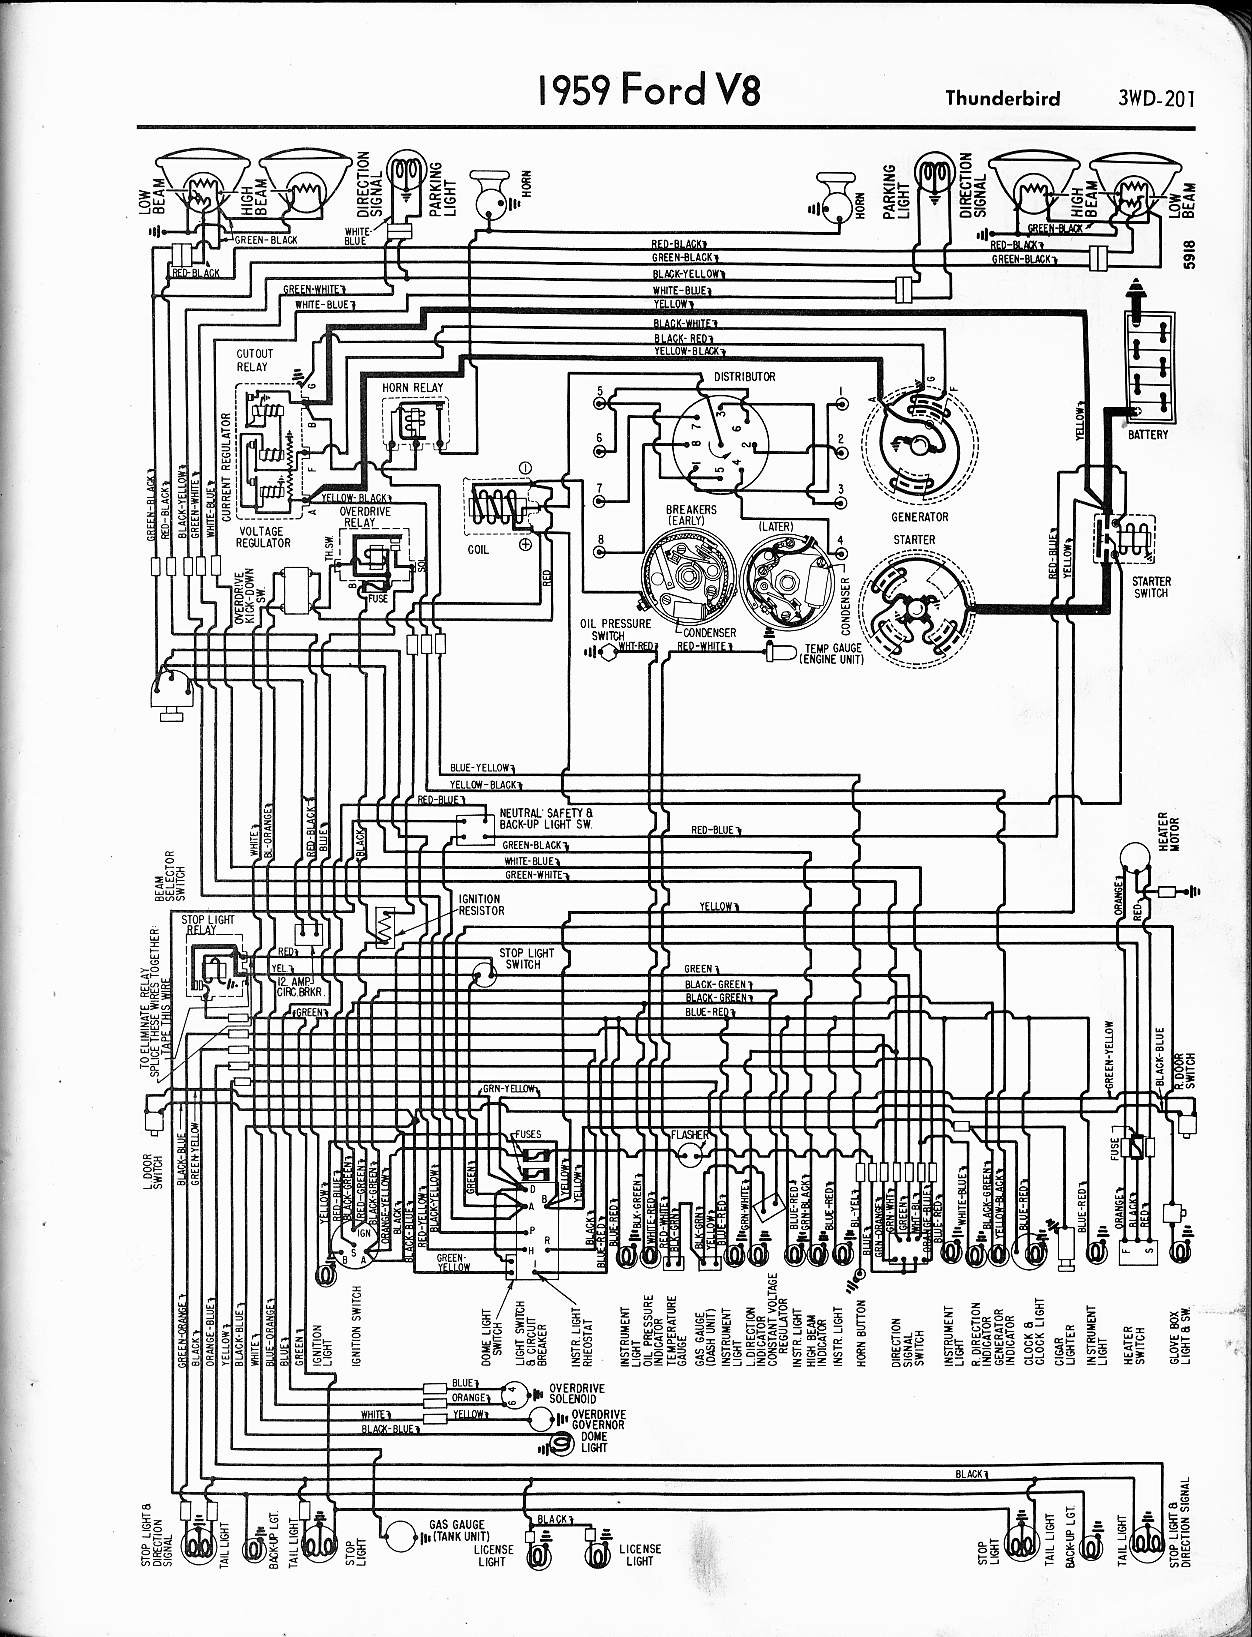 Straight Six Engine Diagram 57 65 ford Wiring Diagrams Of Straight Six Engine Diagram